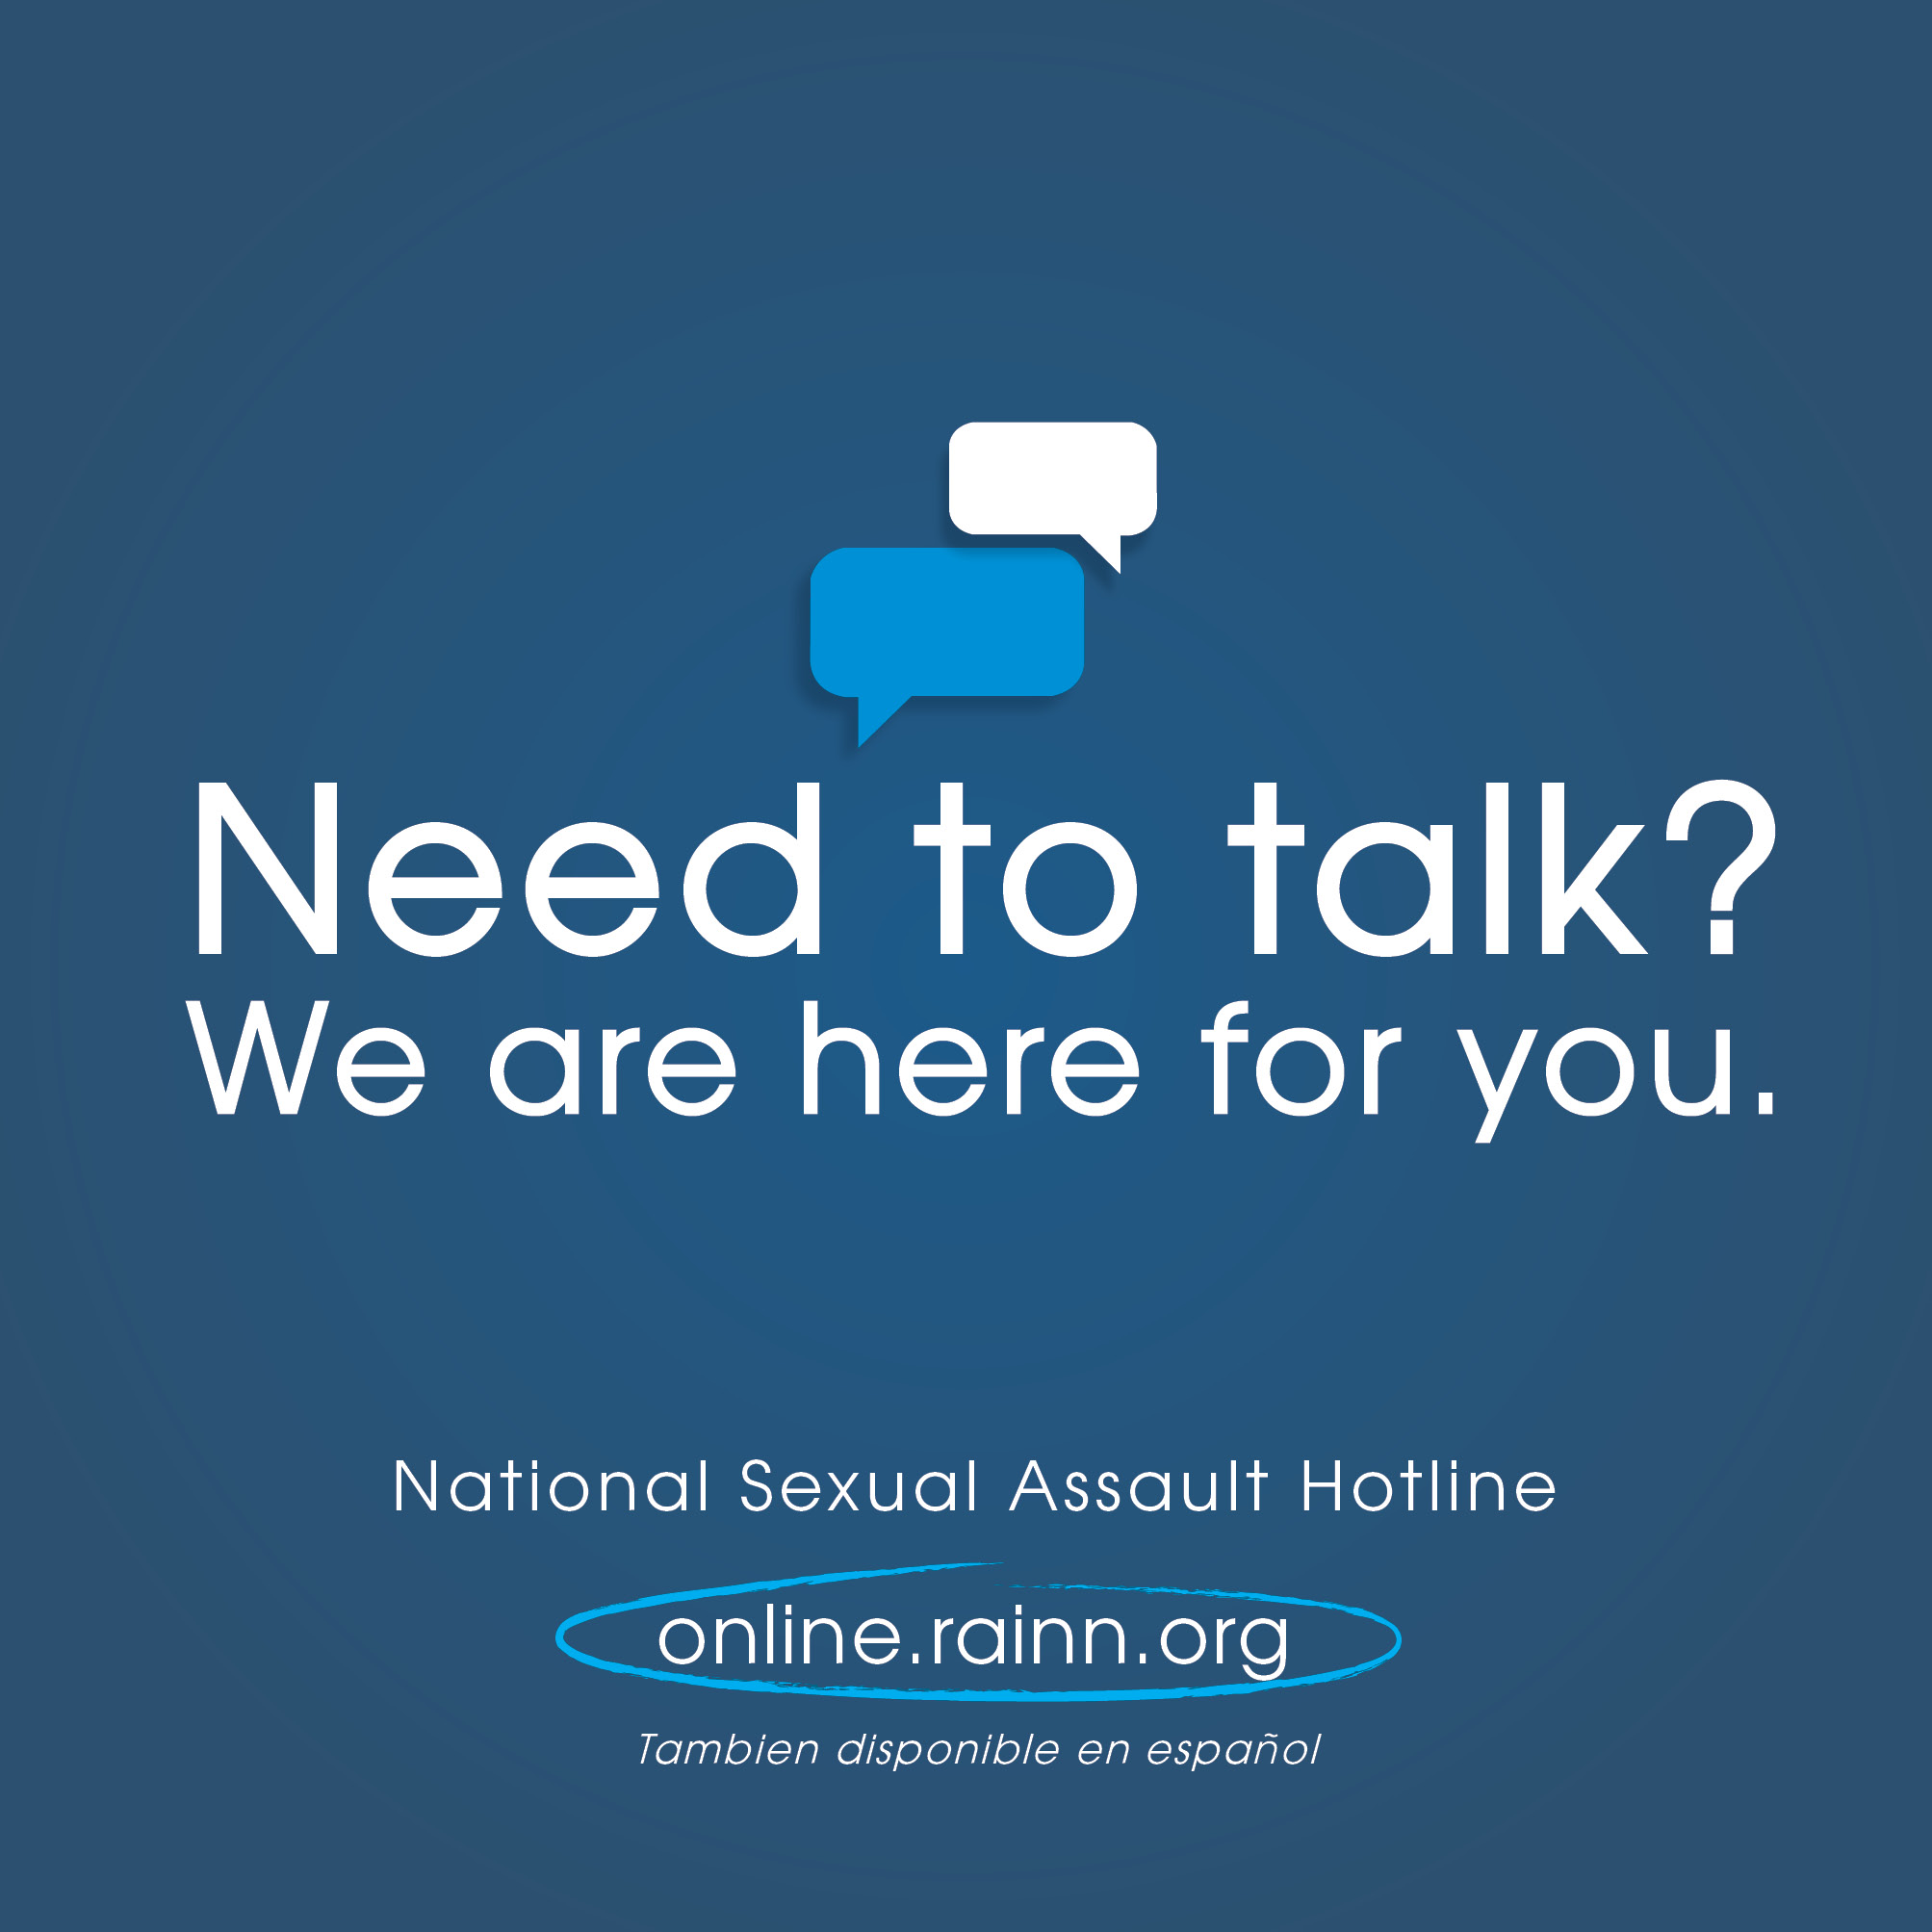 Nation Sexual Assault Hotline